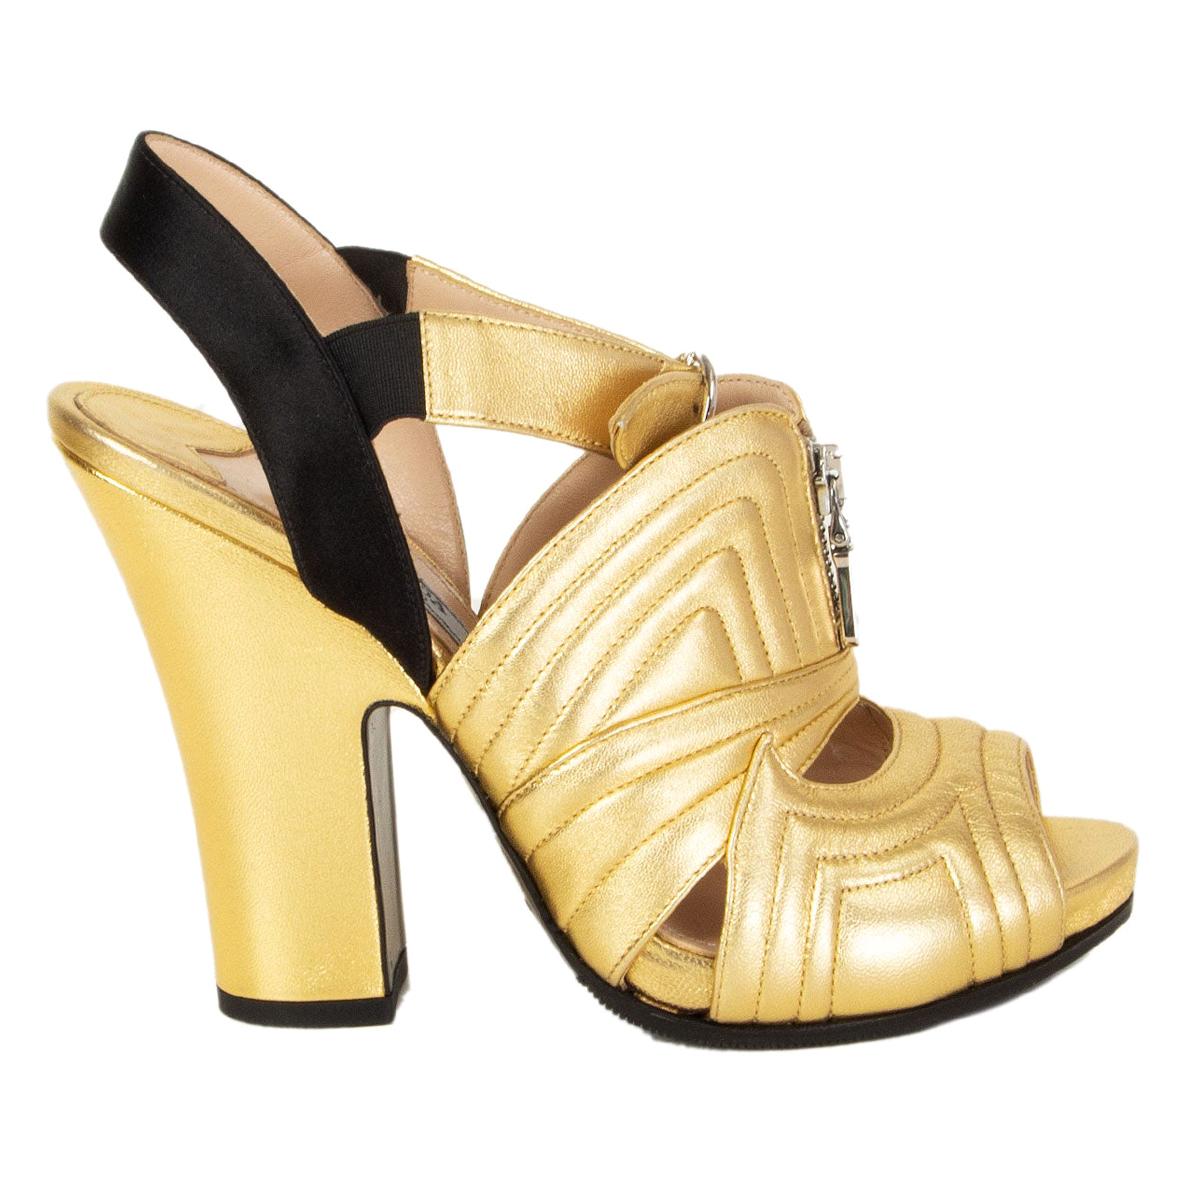 PRADA metallic gold leather QUILTED BLOCK HEEL Sandals Shoes 36.5